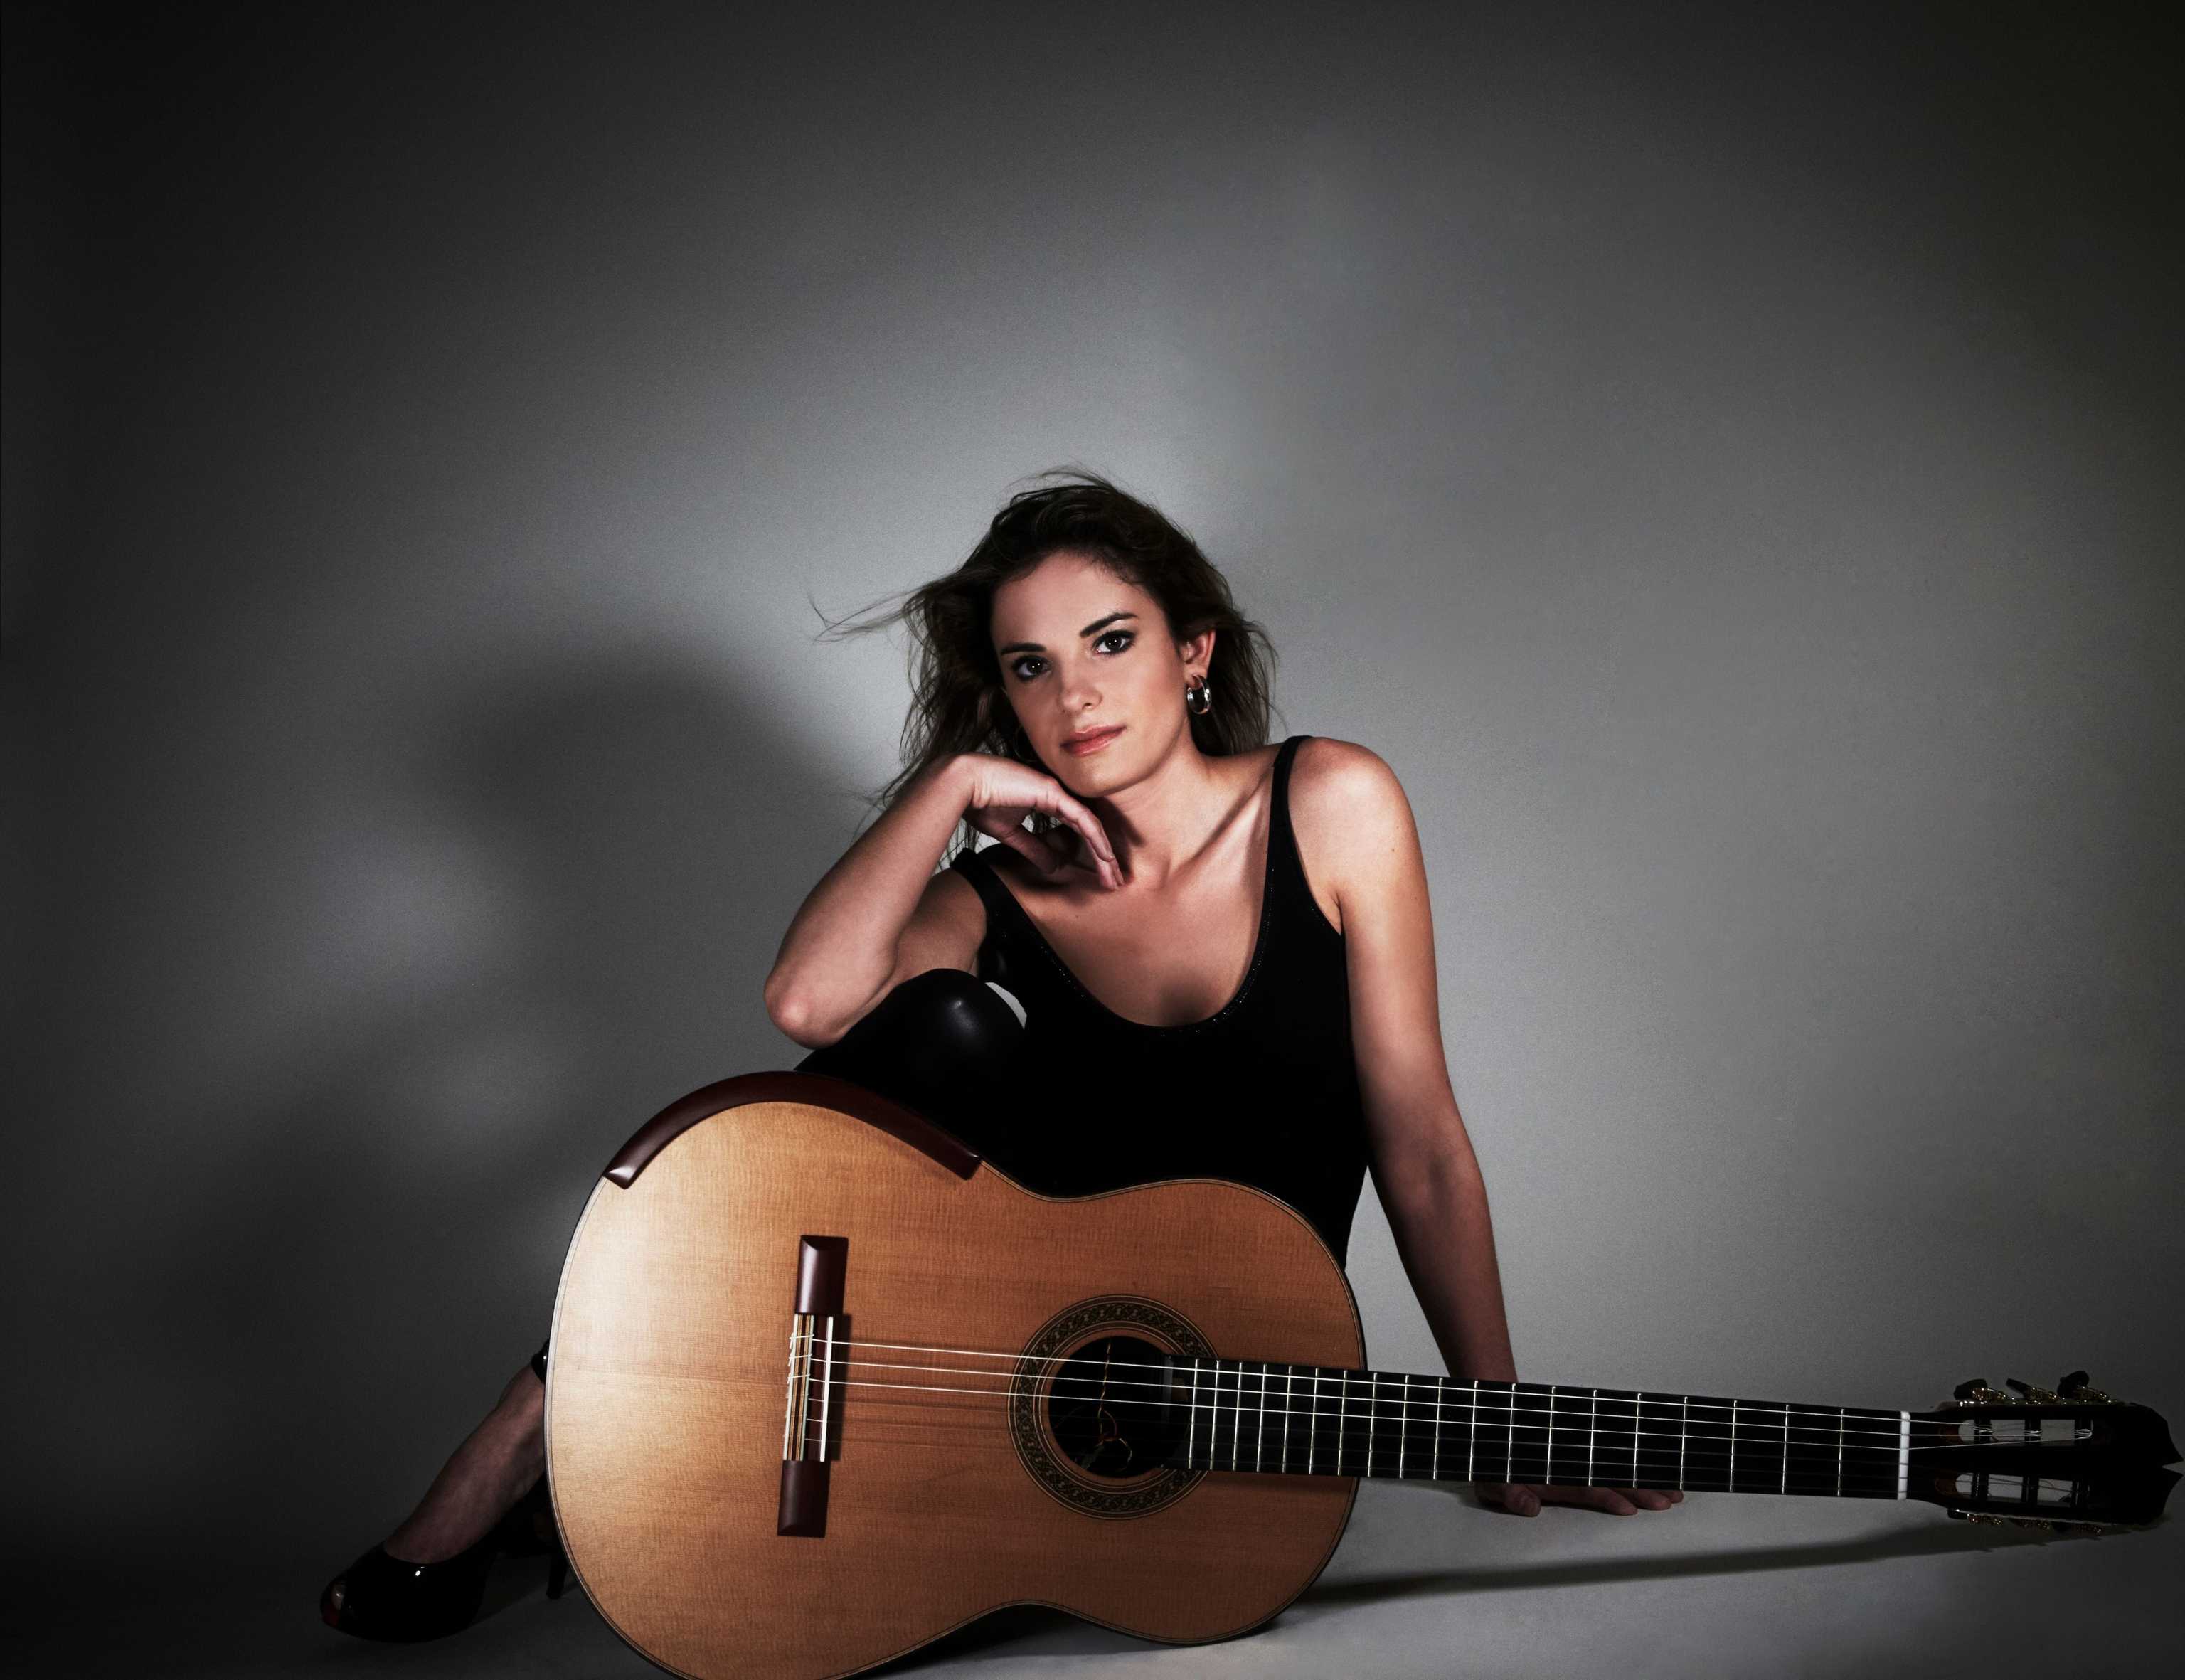 La guitarrista Ana Vidovic